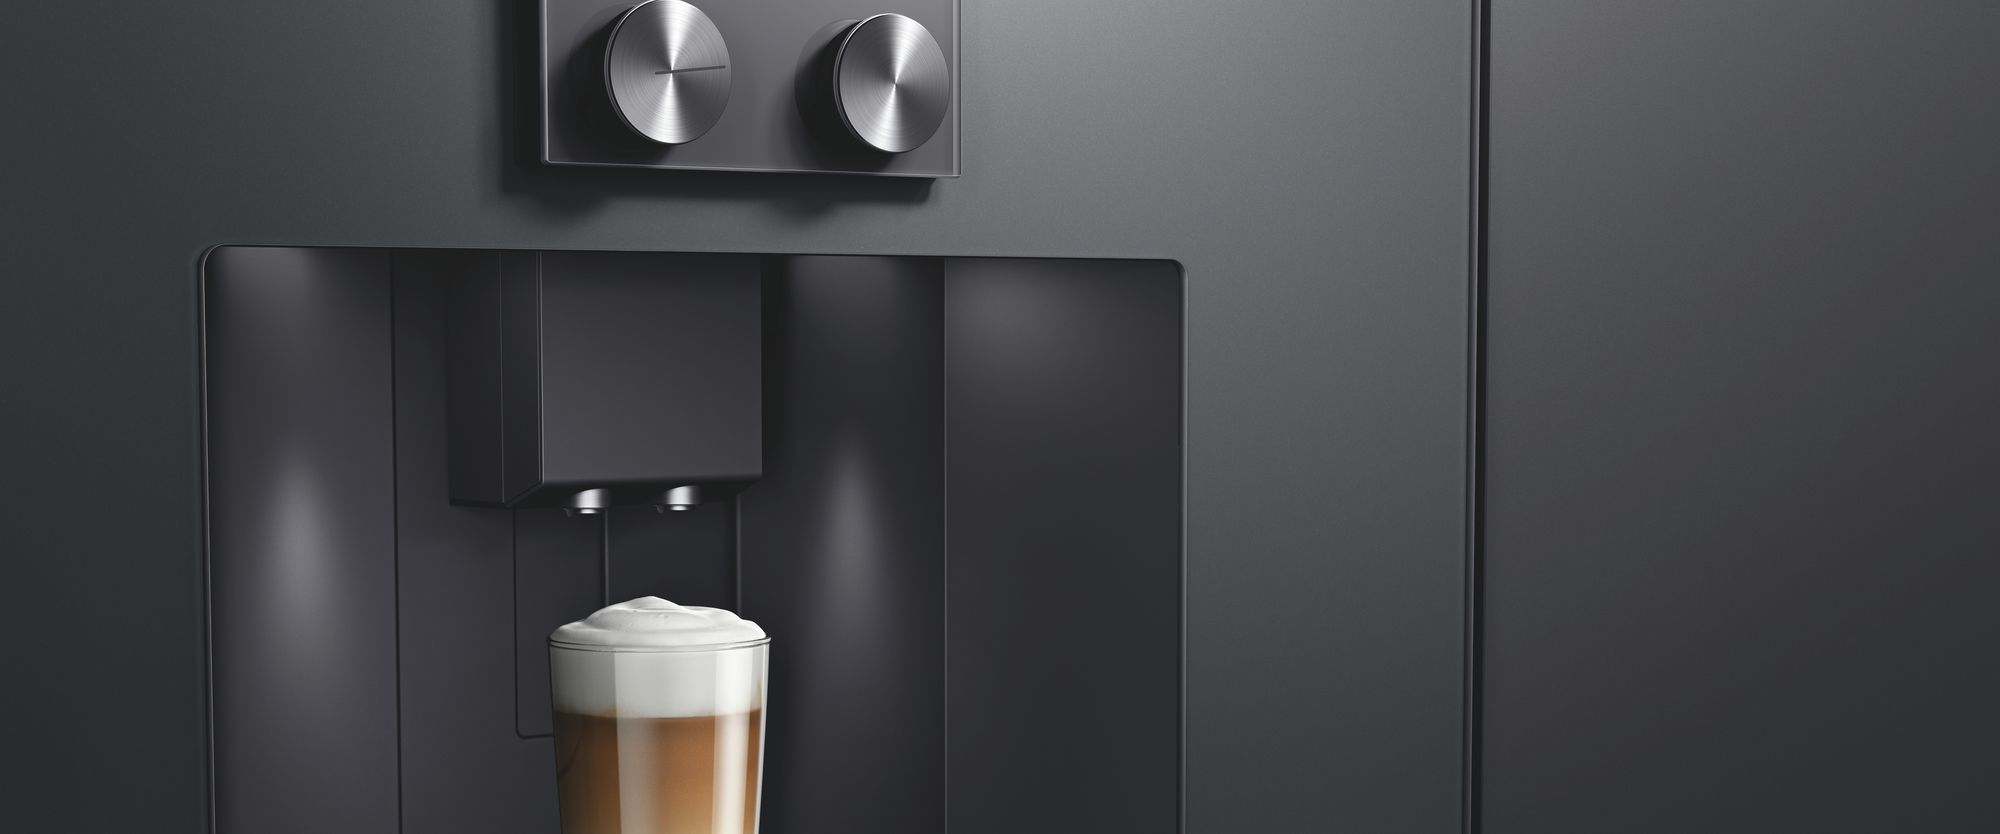 Gaggenau 200 Series Coffee Machines by FCI London